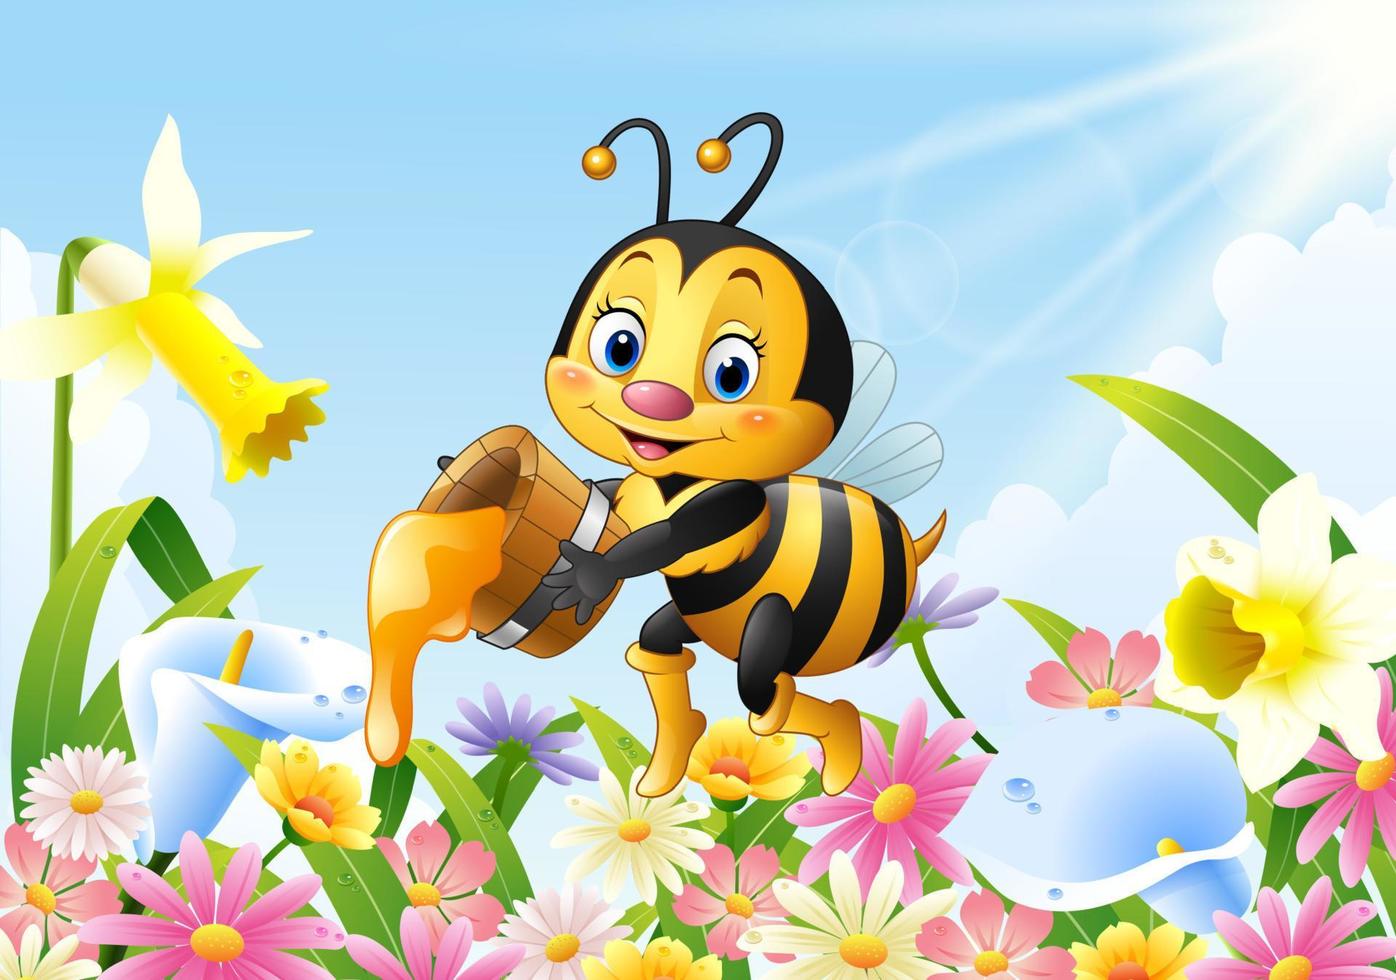 Cartoon bee holding honey bucket with flower background vector